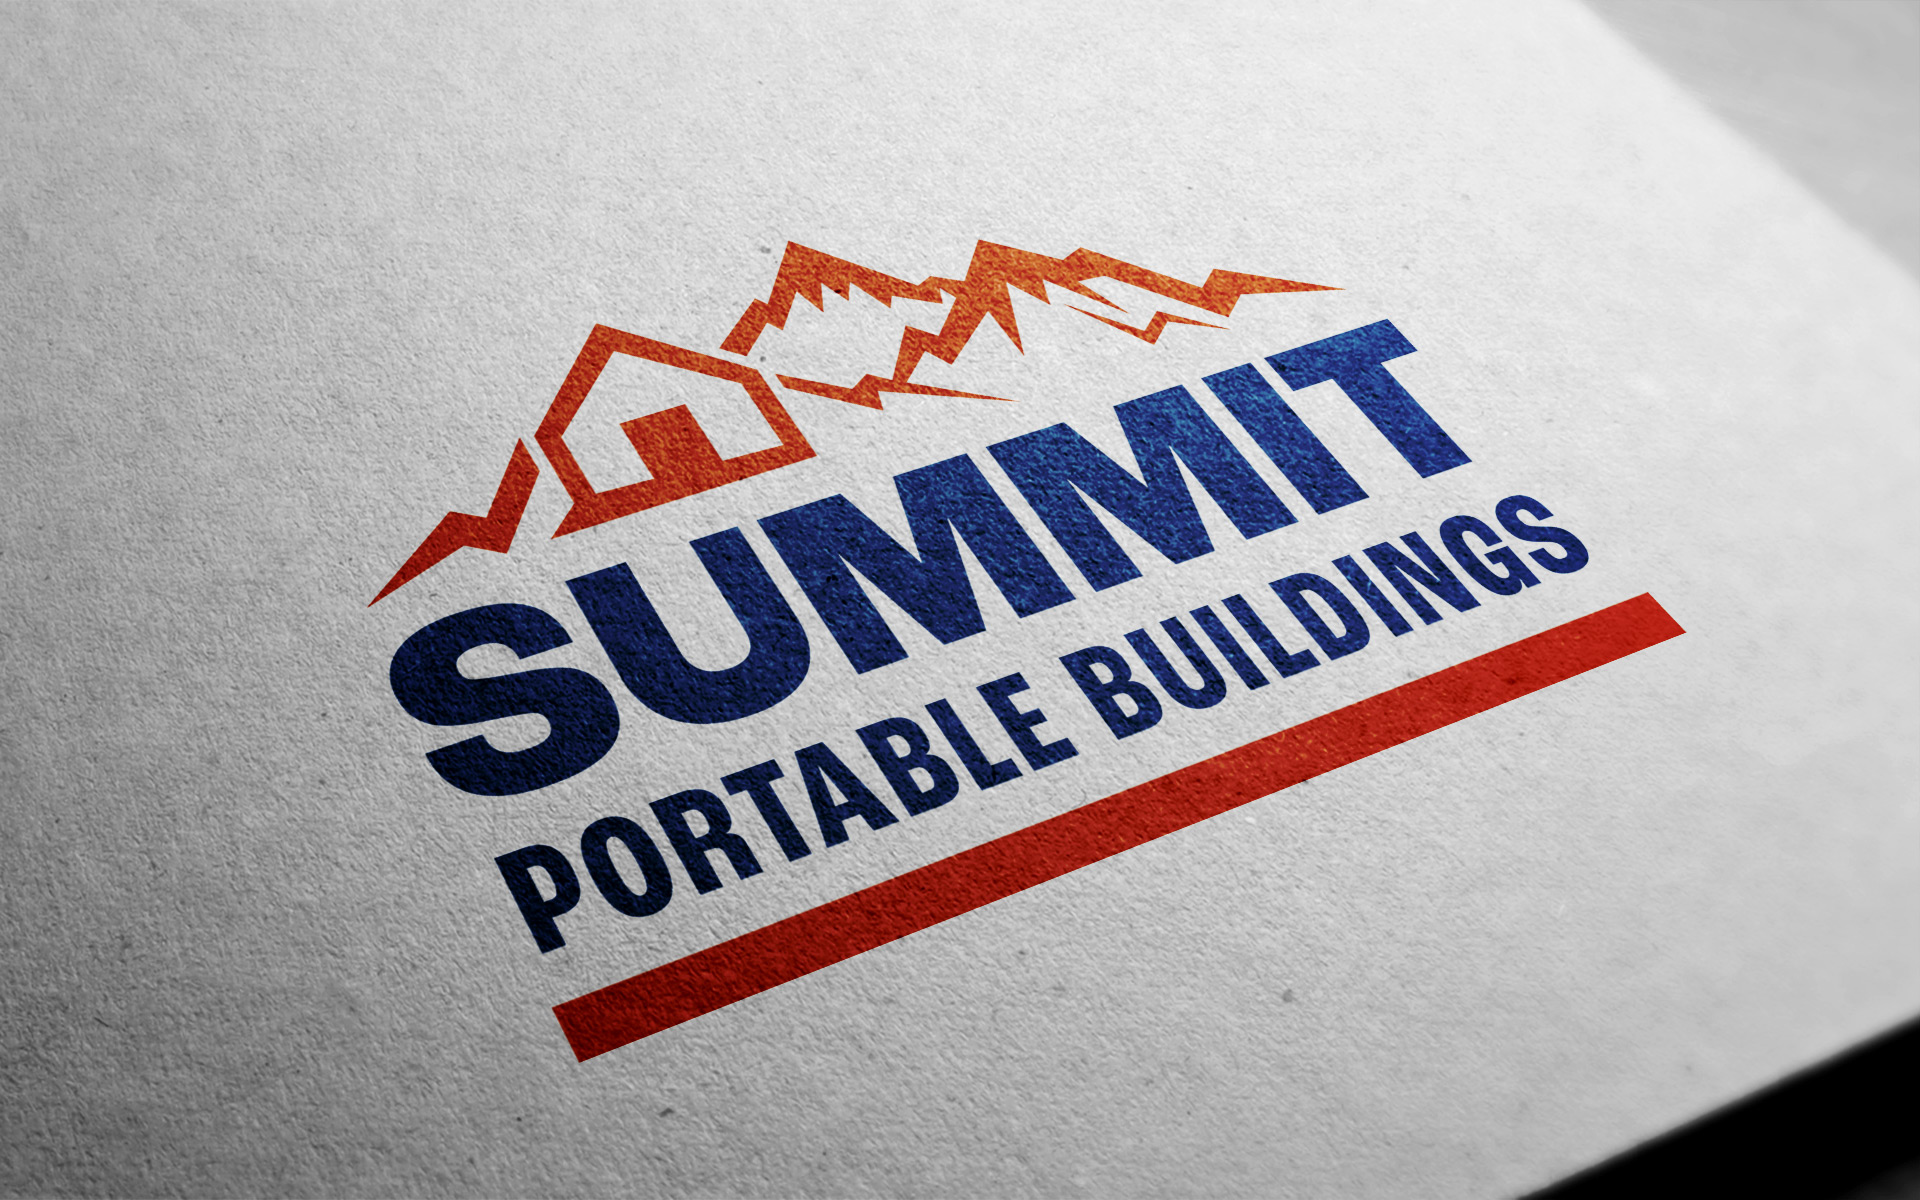 summit portable buildings logo